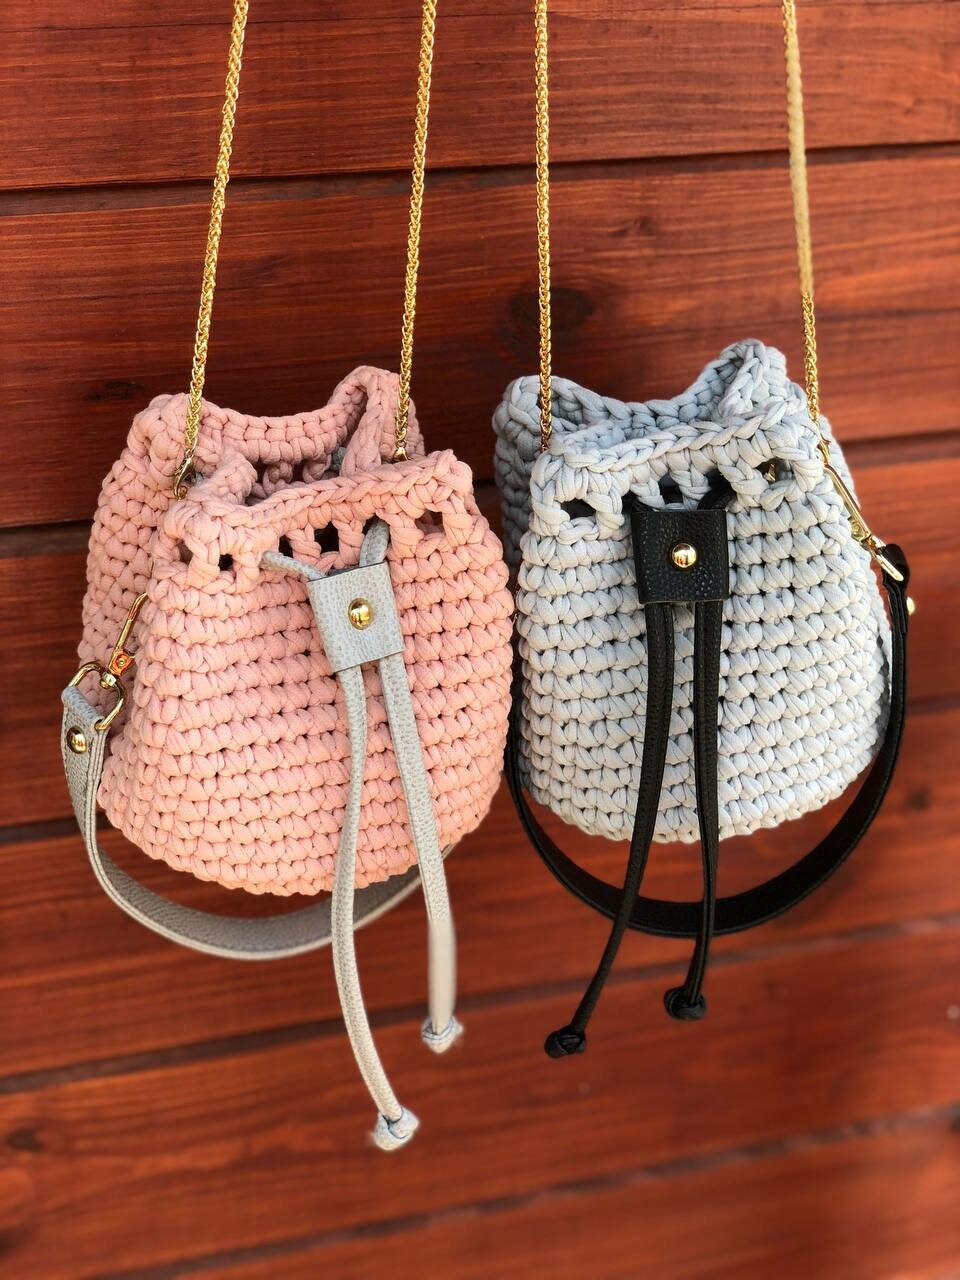 DIY Crochet Bag Kit With T-Shirt Yarn Craft Kit With Yarn For | Etsy